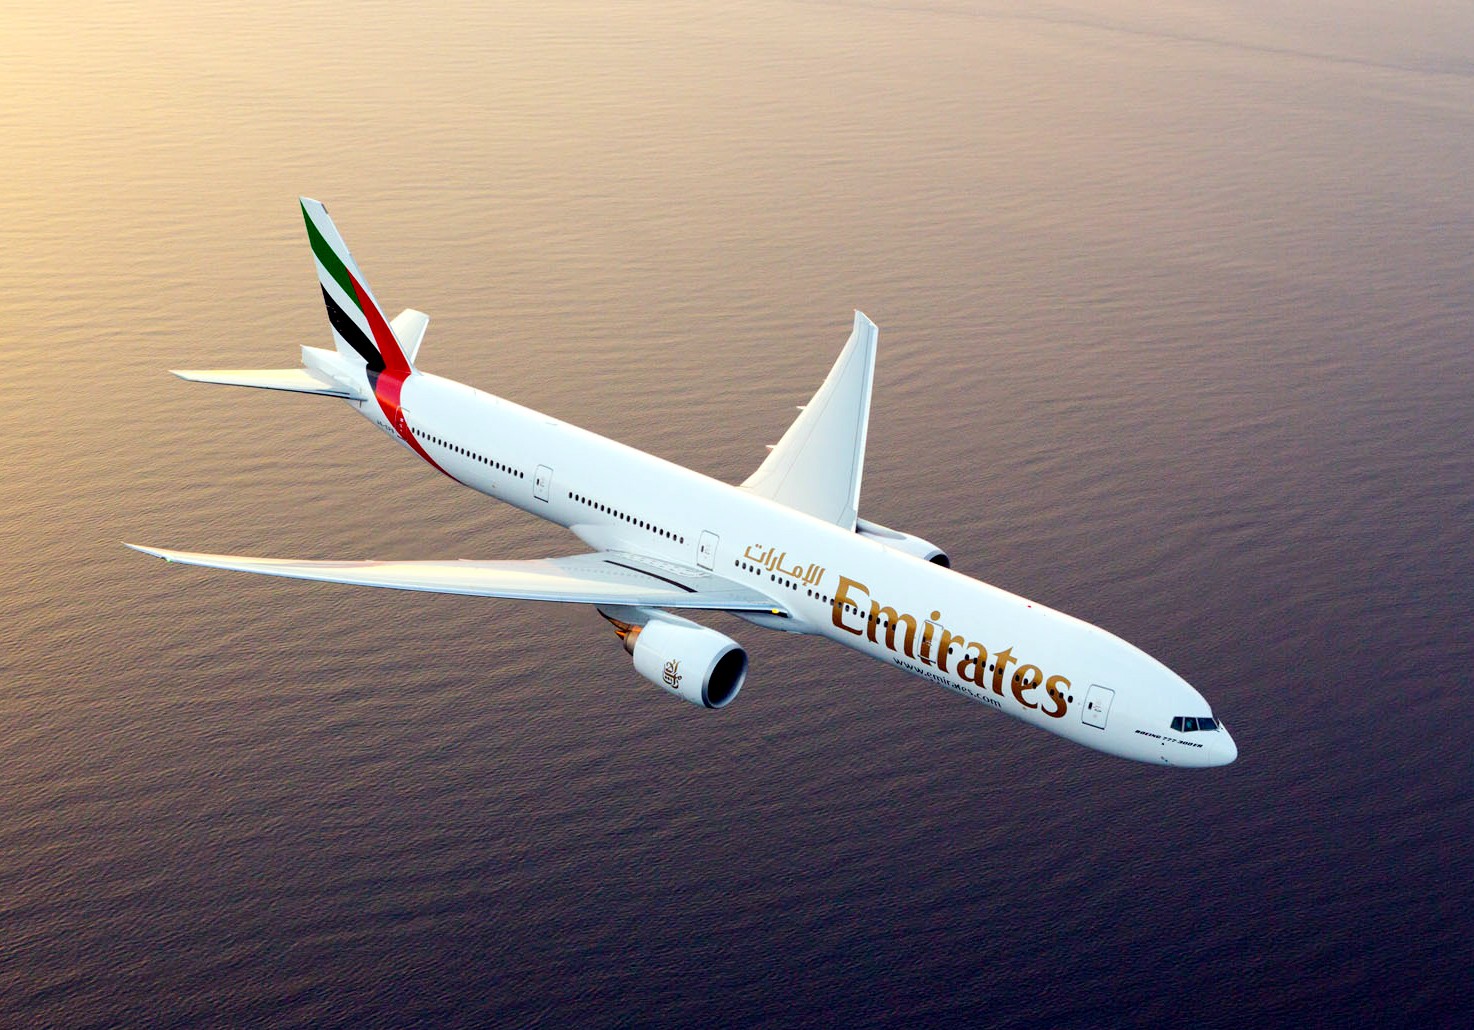 www.emirates.com